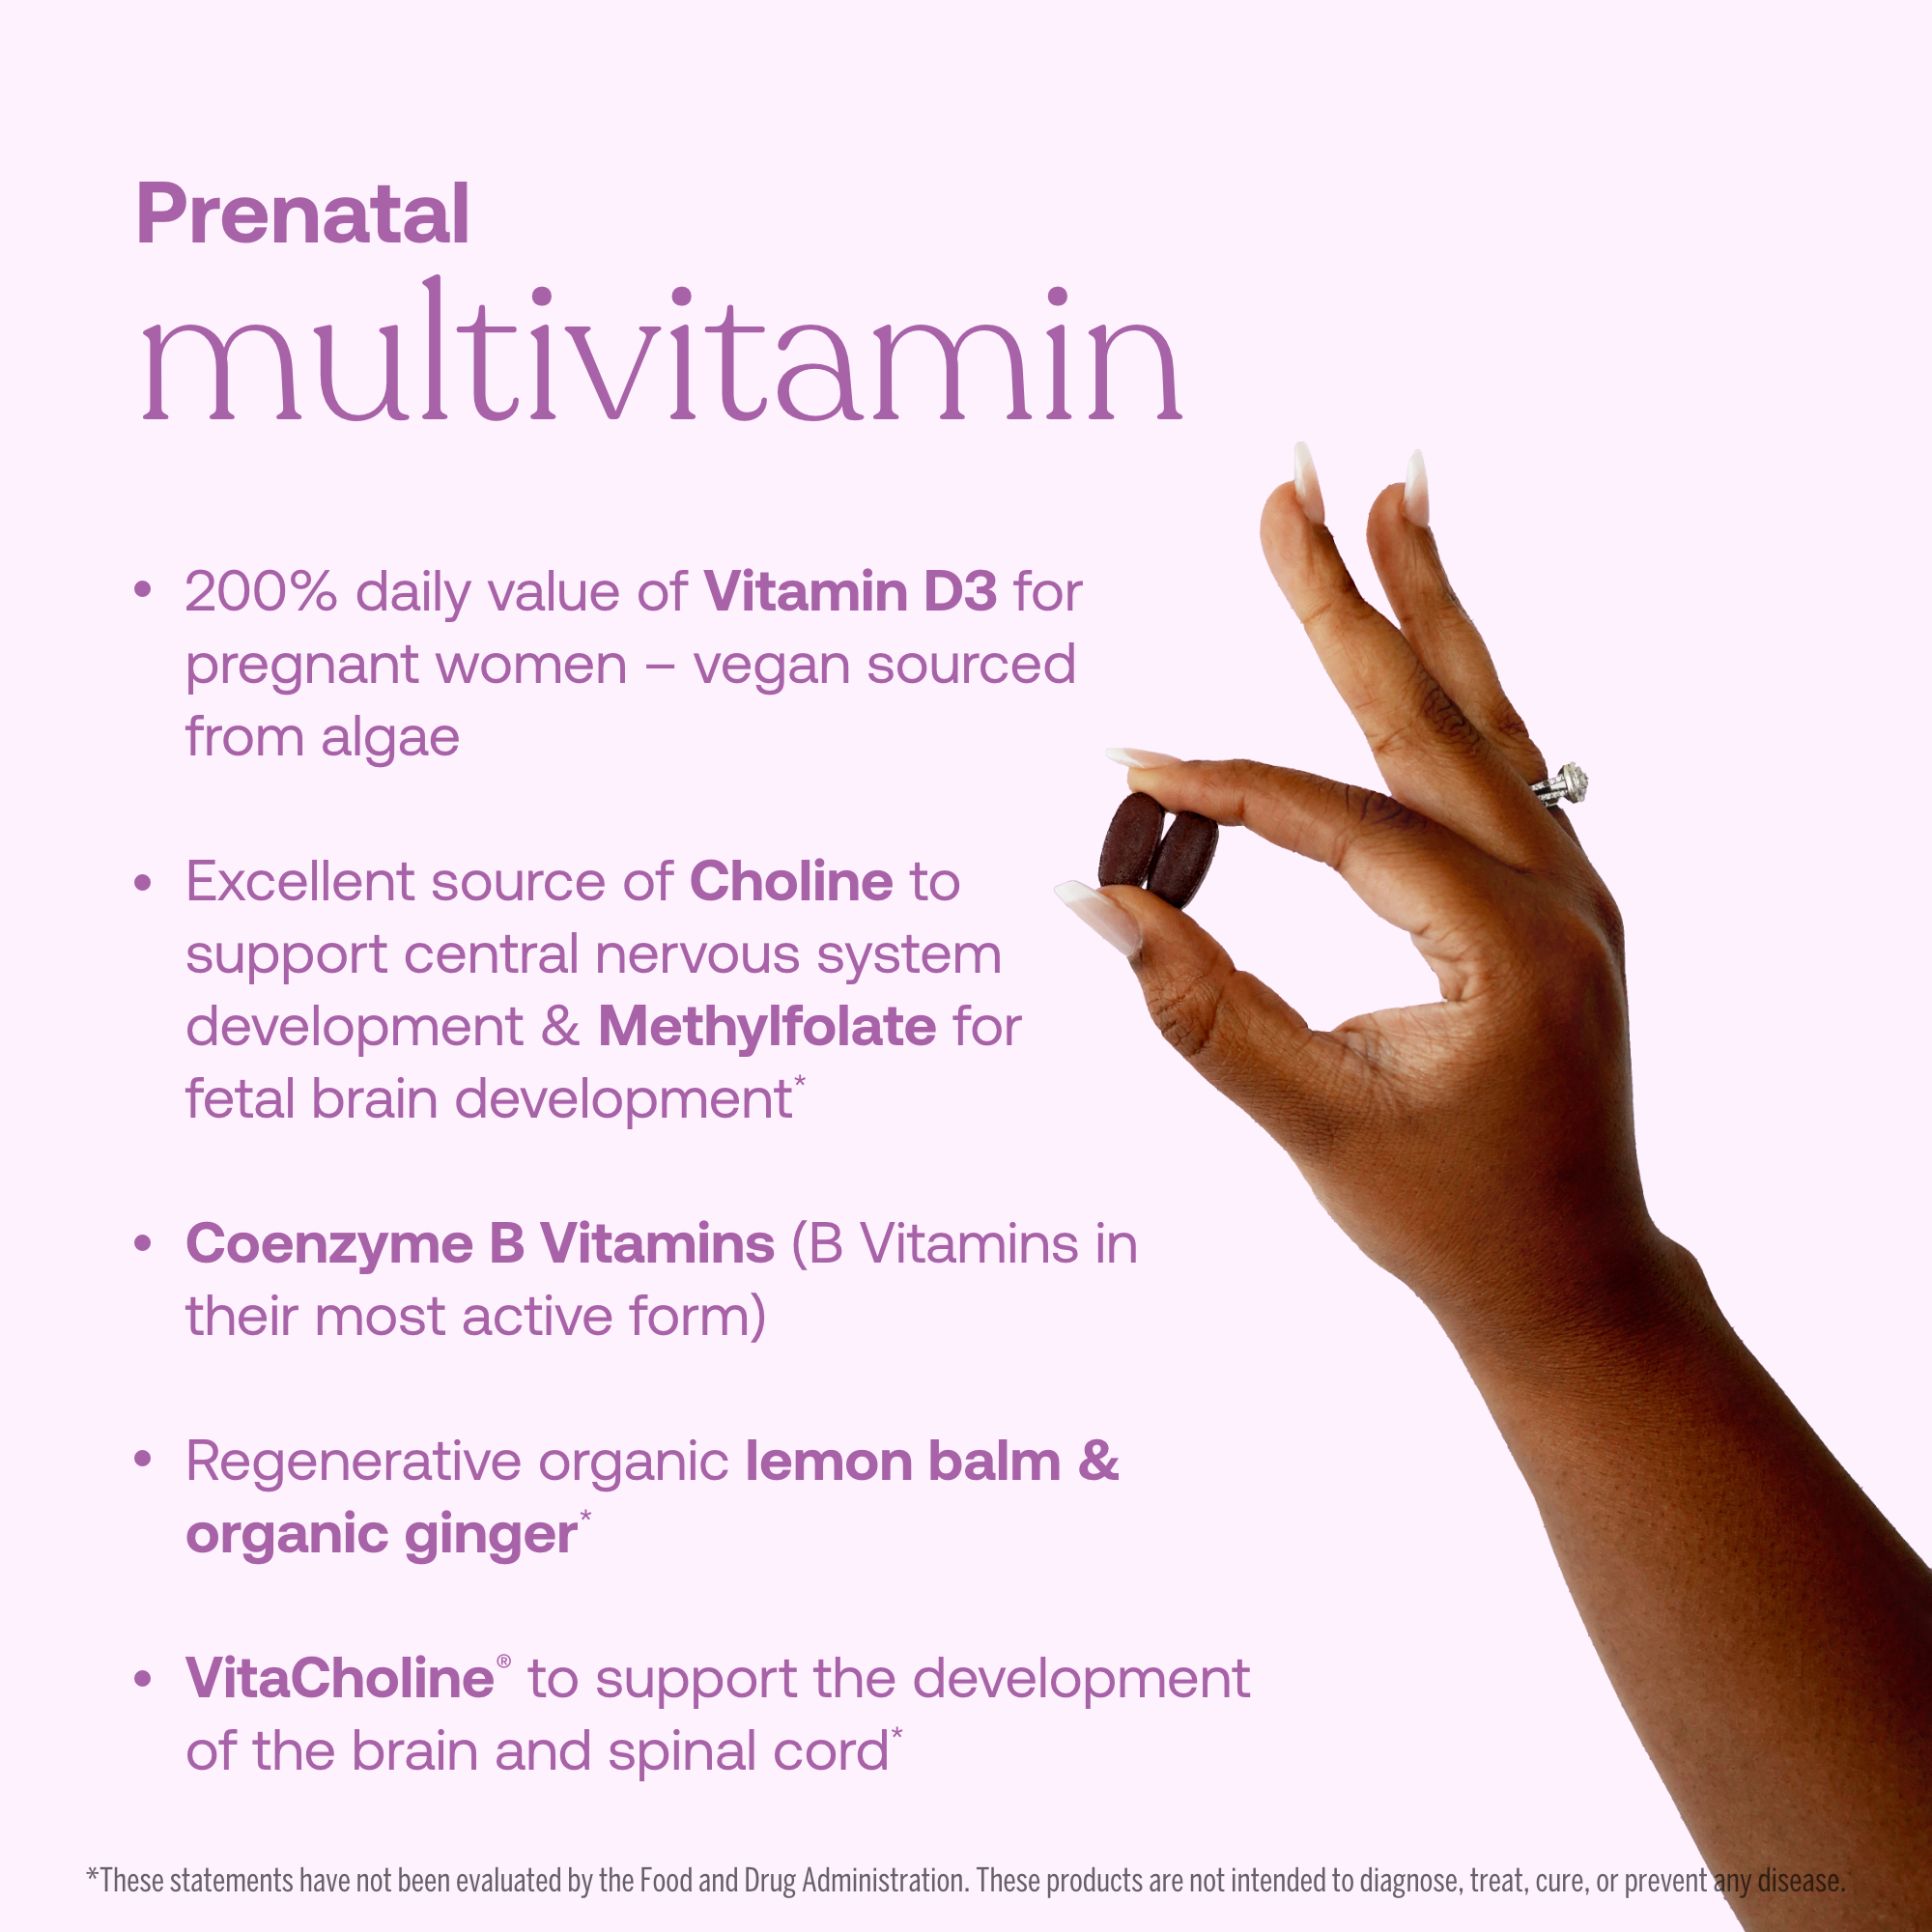 Prenatal Multivitamin